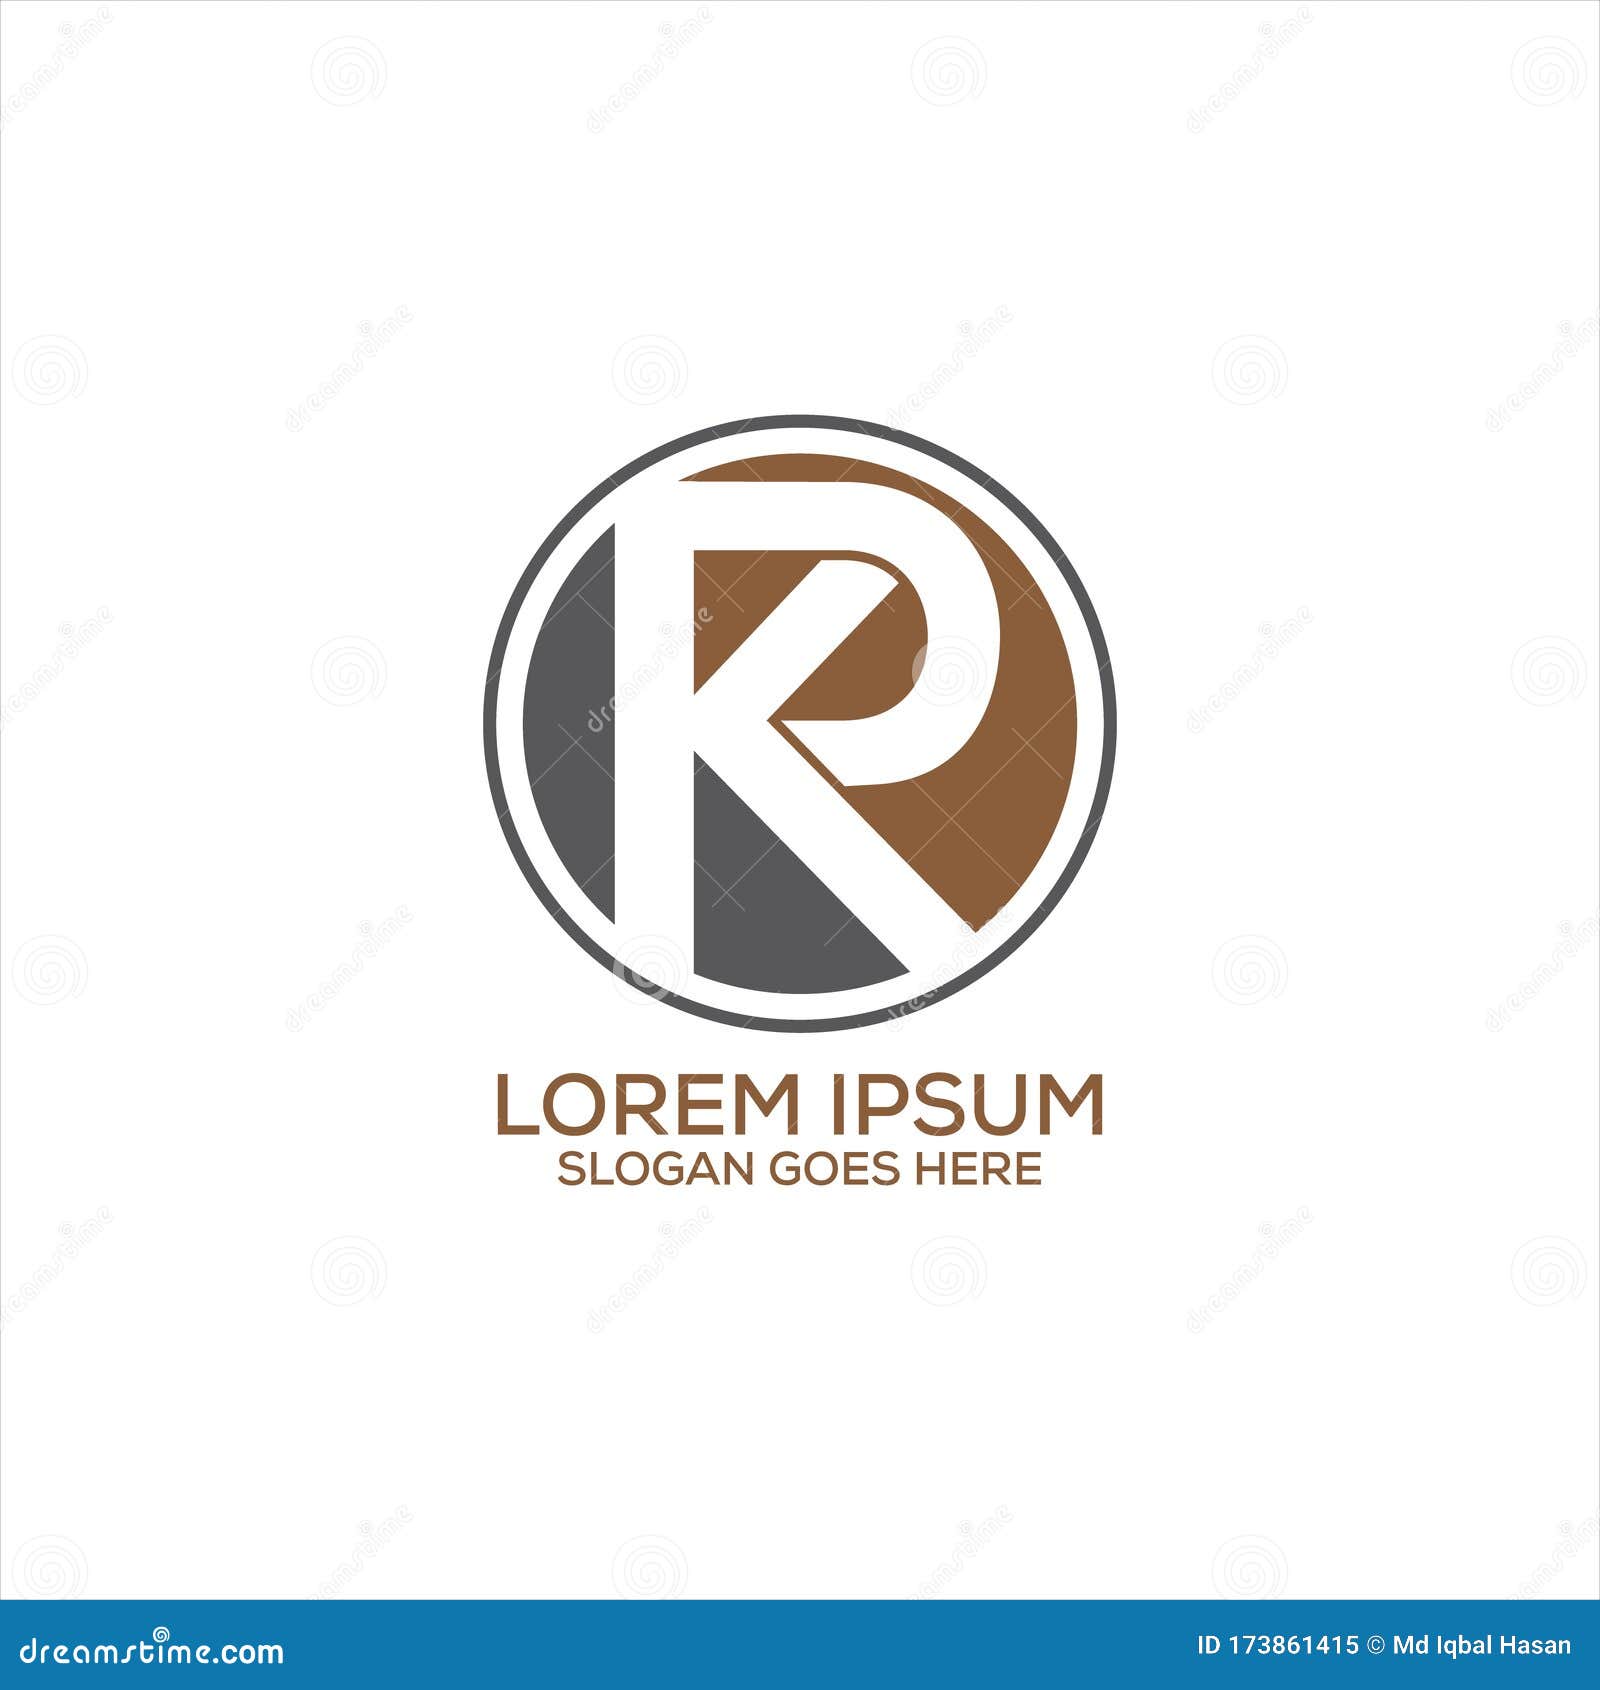 modern minimalist pk or kp letter logo  template vrctor eps